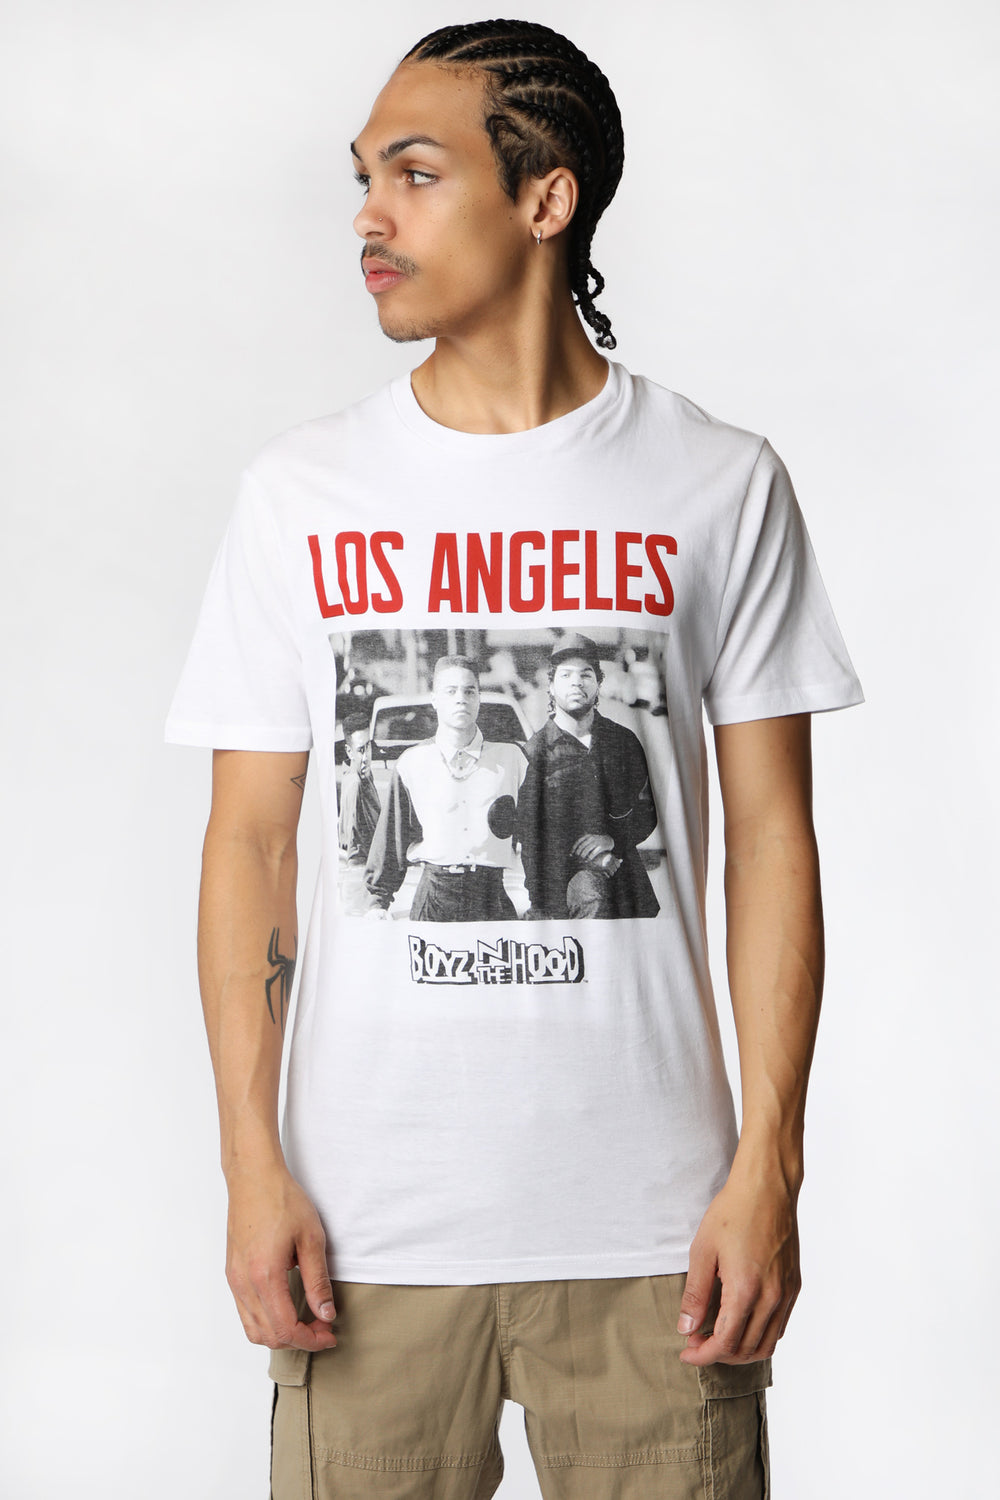 T-Shirt Imprimé Boyz N The Hood Los Angeles Homme T-Shirt Imprimé Boyz N The Hood Los Angeles Homme